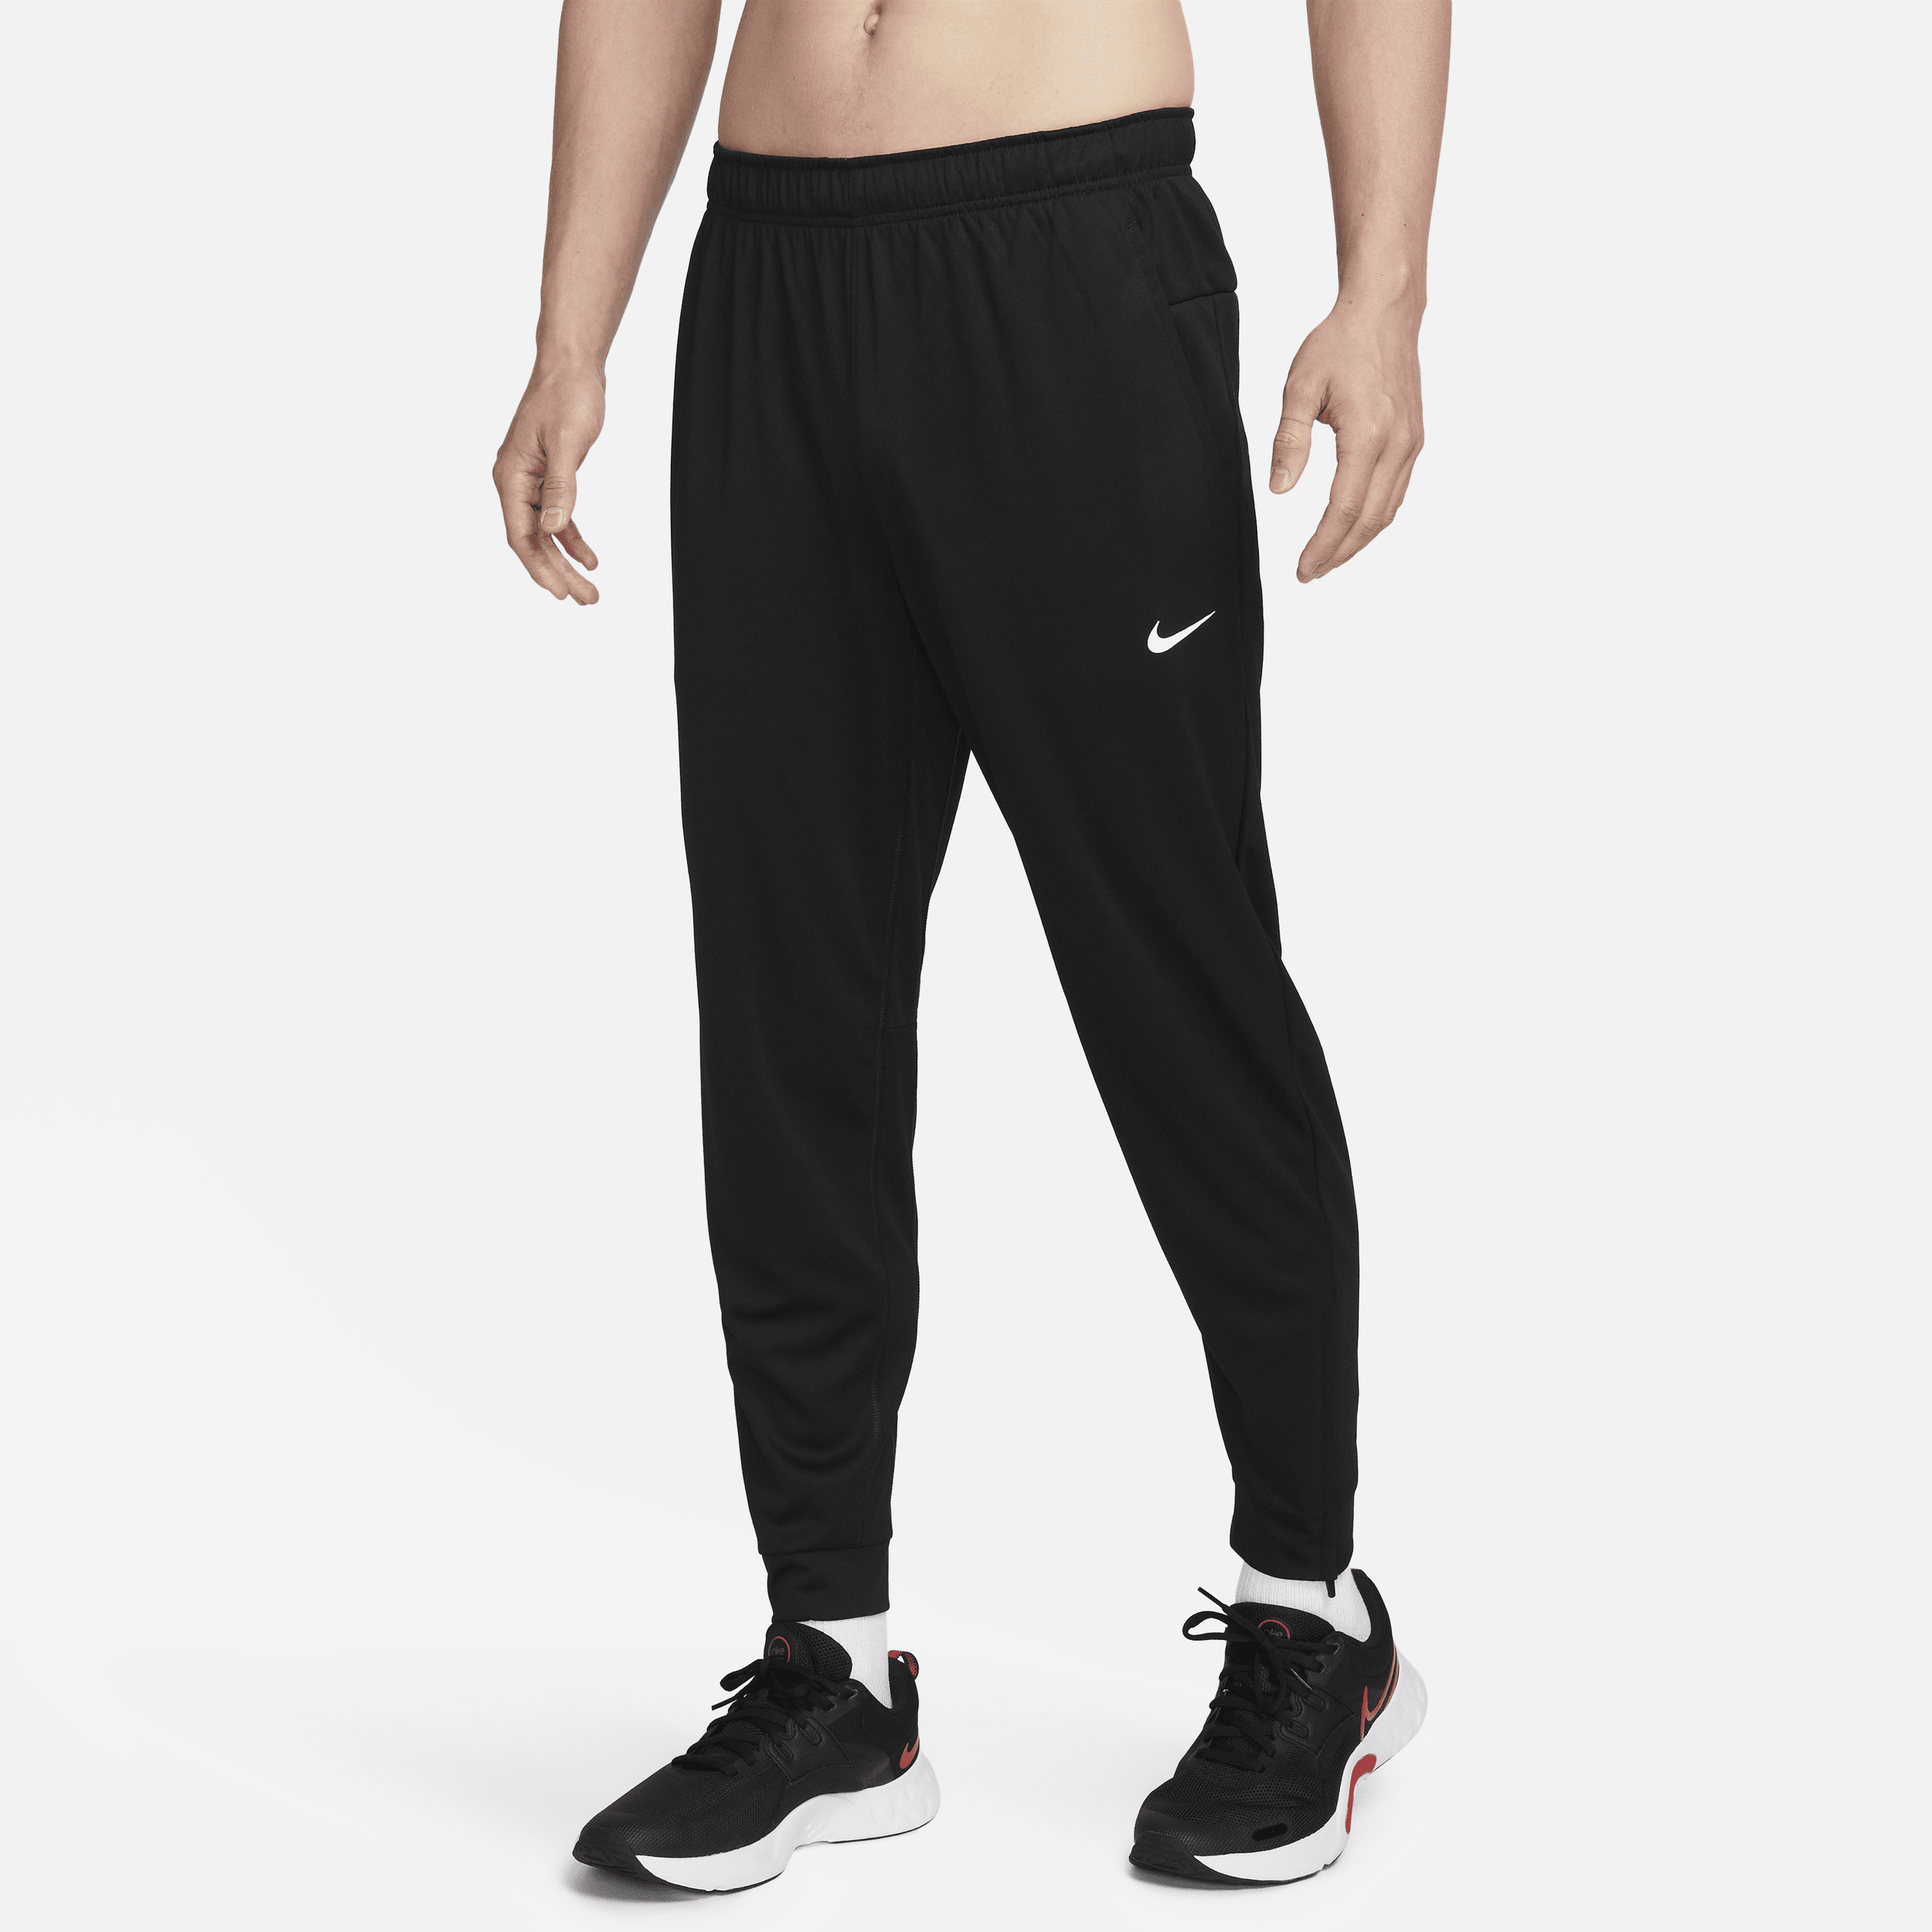 Pantaloni versatili affusolati Dri-FIT Nike Totality – Uomo - Nero